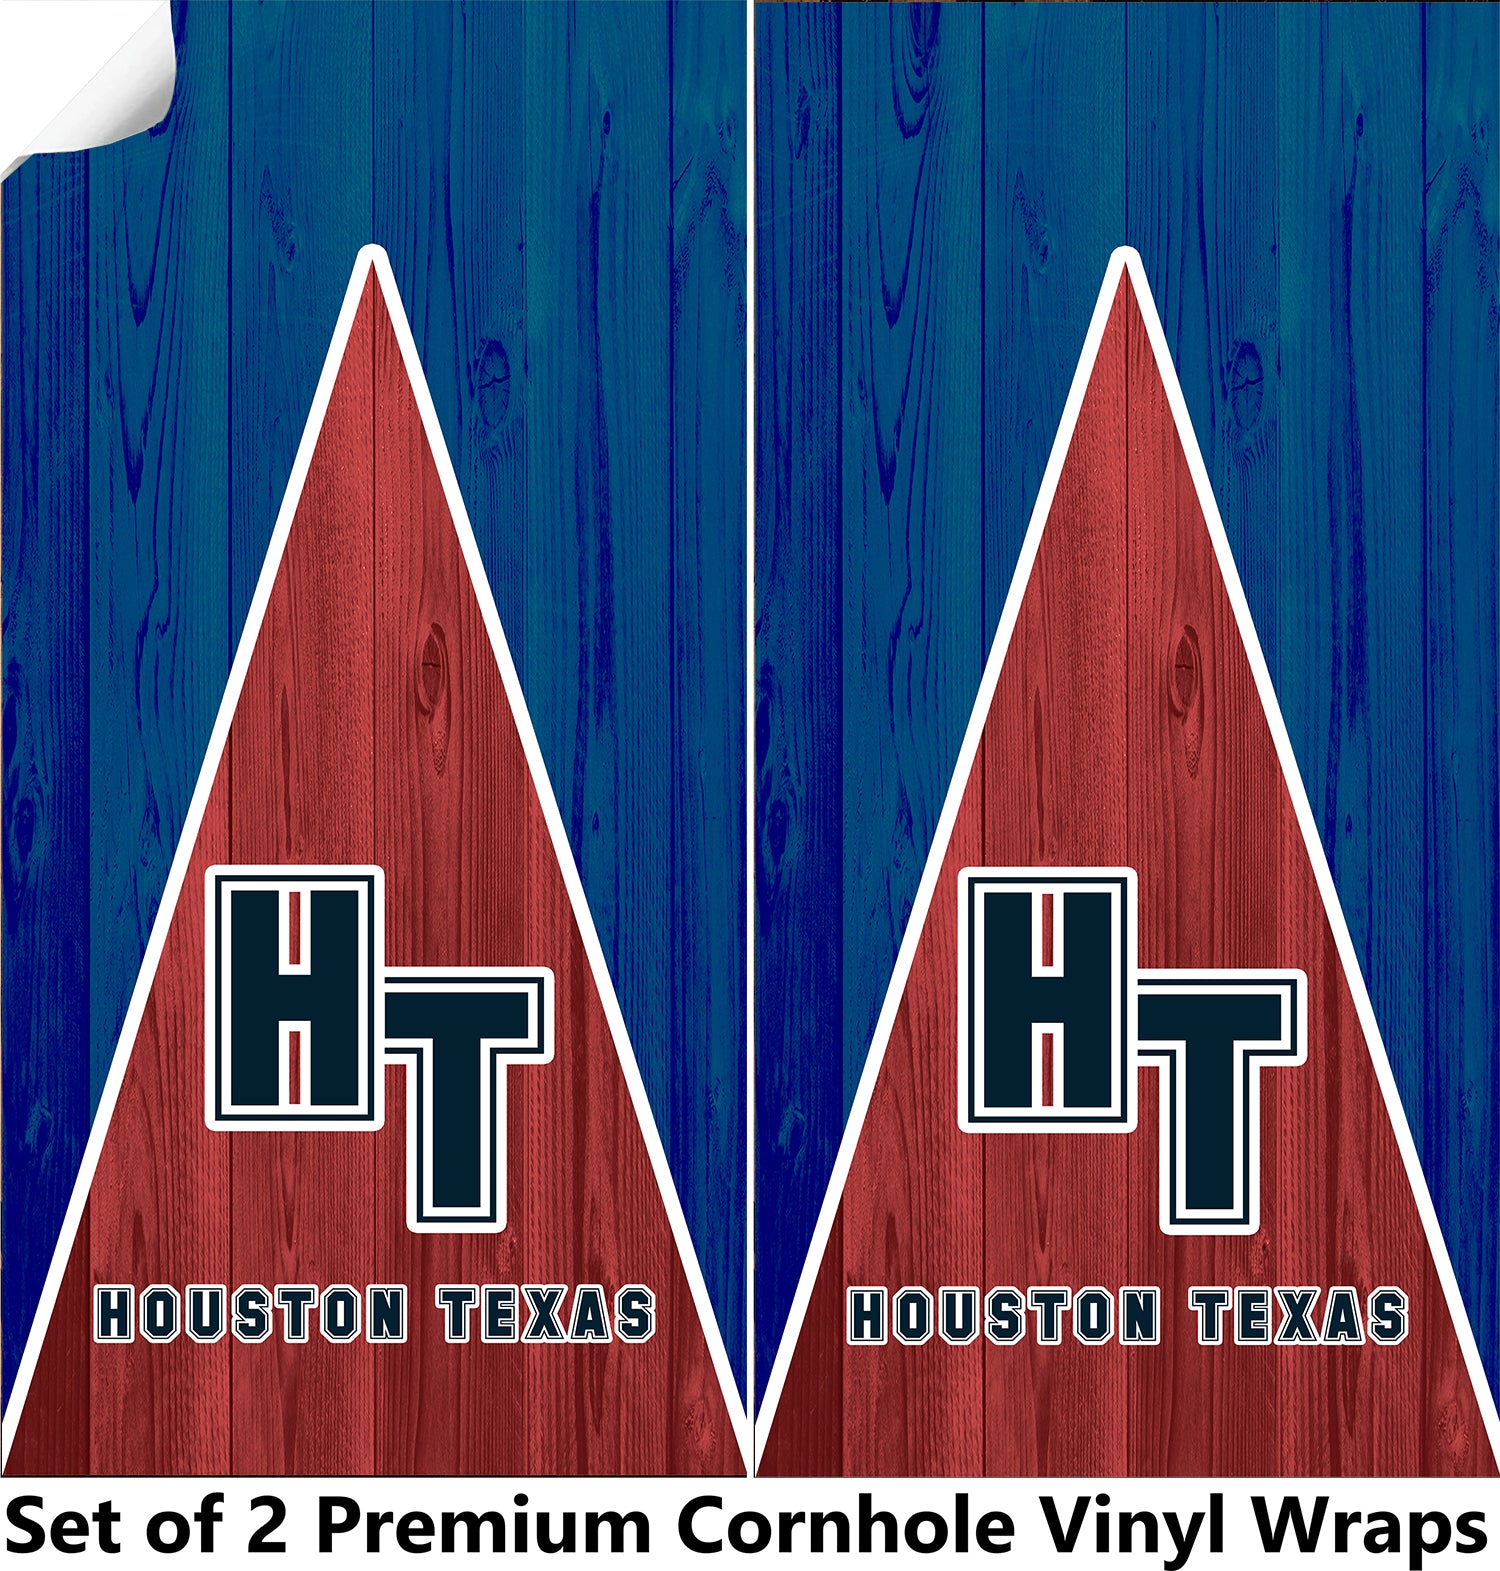 Houston Texas Football Cornhole Boards Wraps (Set of 2)